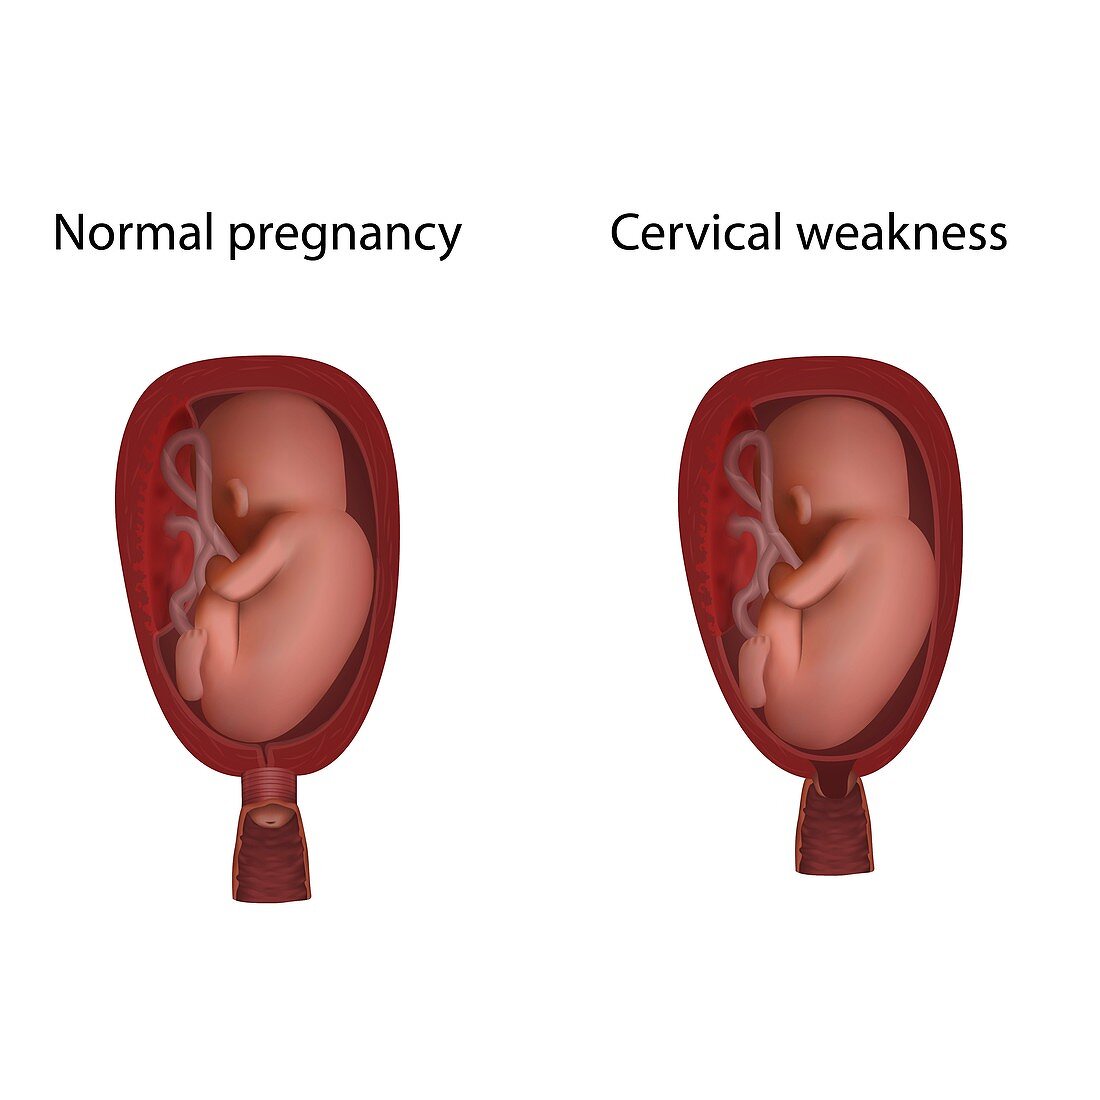 Cervical weakness and normal pregnancy, illustration